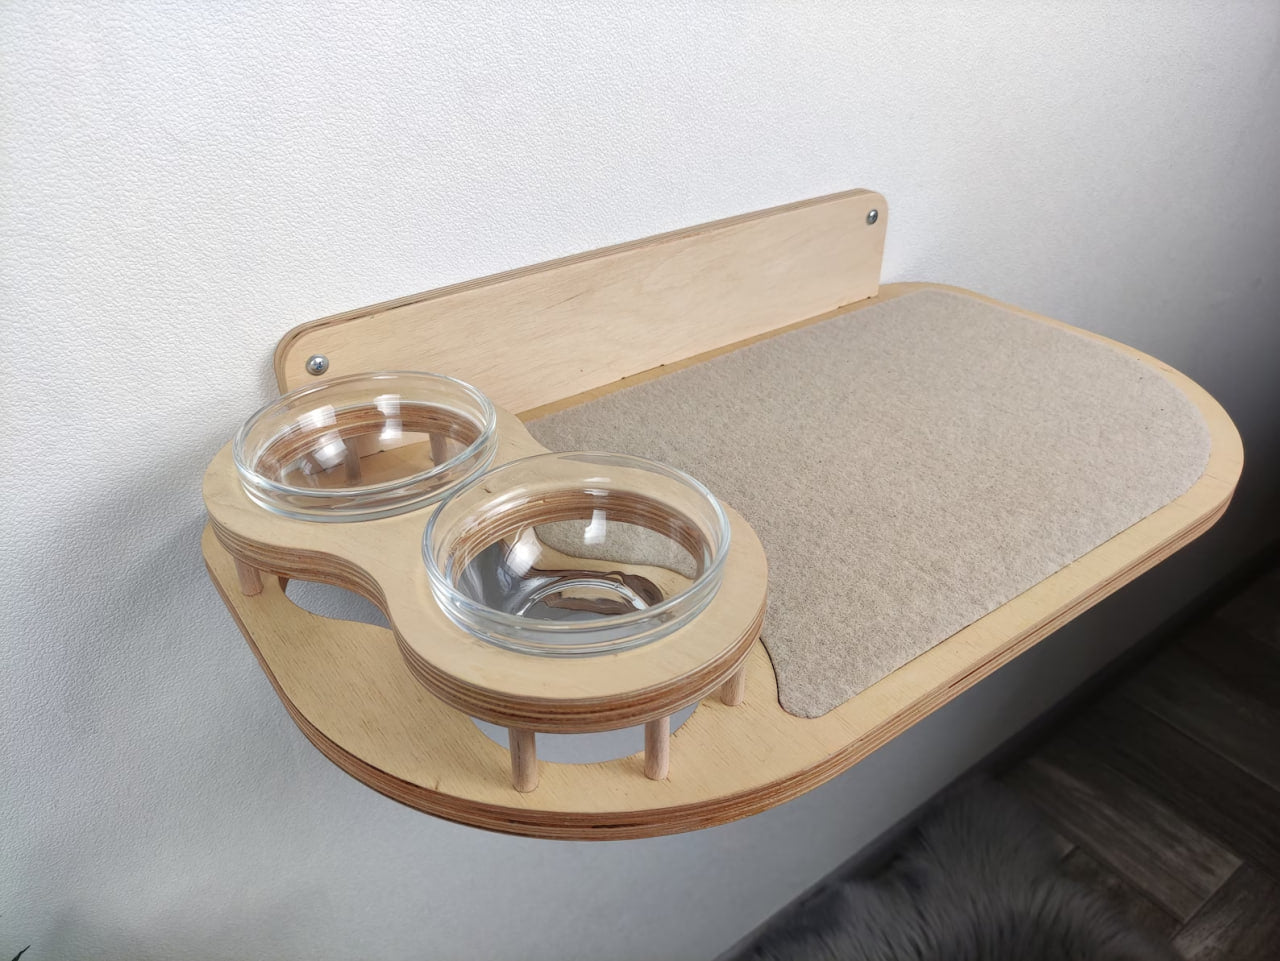 Cat feeder set for big cats - Light & raised bowls plus 2 steps